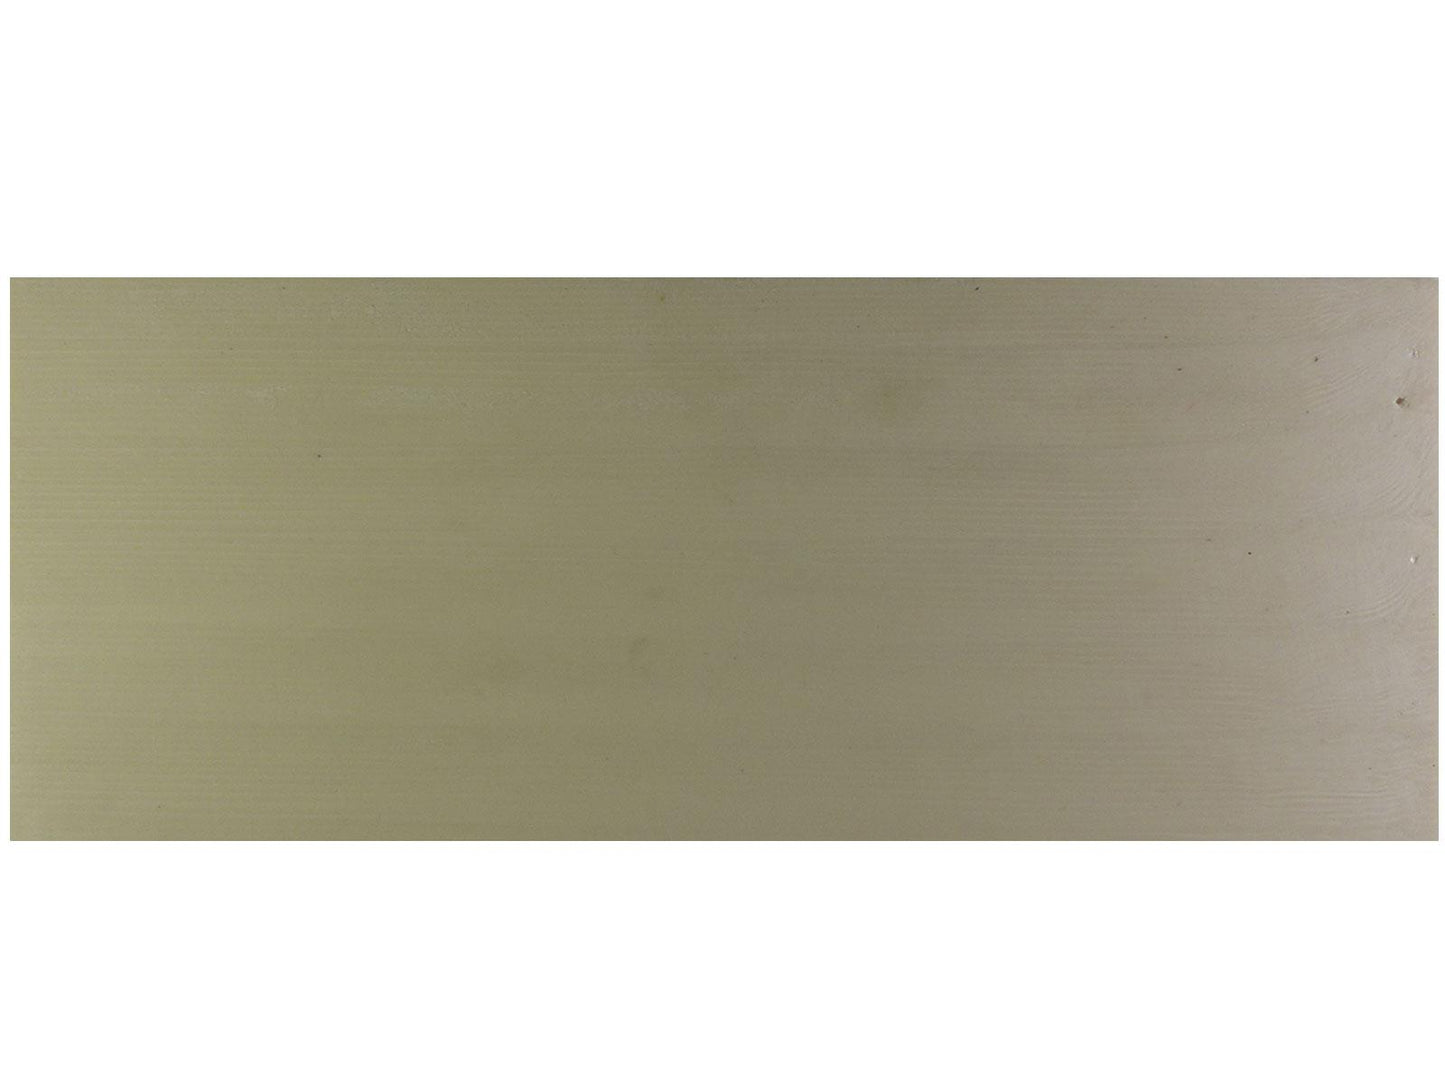 Incudo (Col 386) Ivory Casein (Galalith) Sheet - 240x100x10mm (9.4x3.94x0.39")